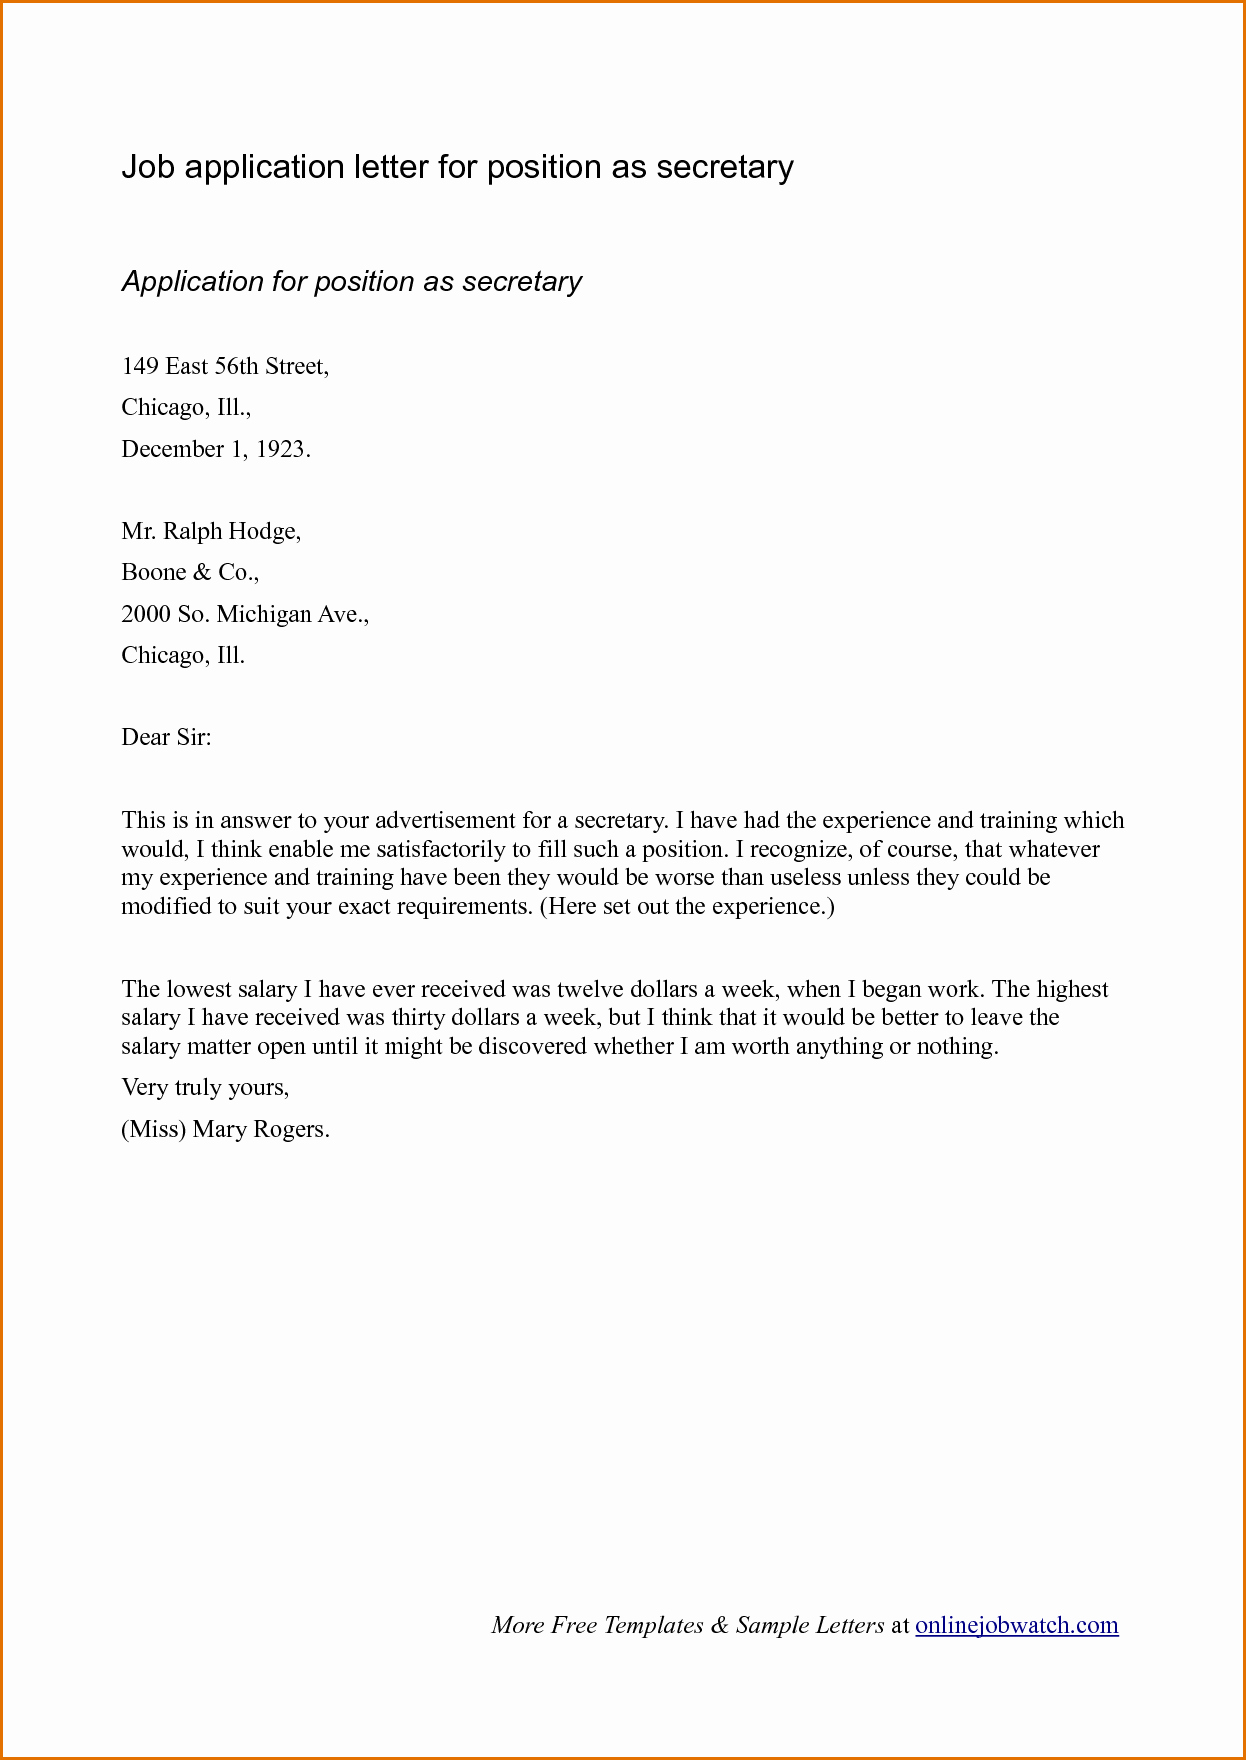 Letter Of Application Examples Inspirational Sample Cover Letter format for Job Application